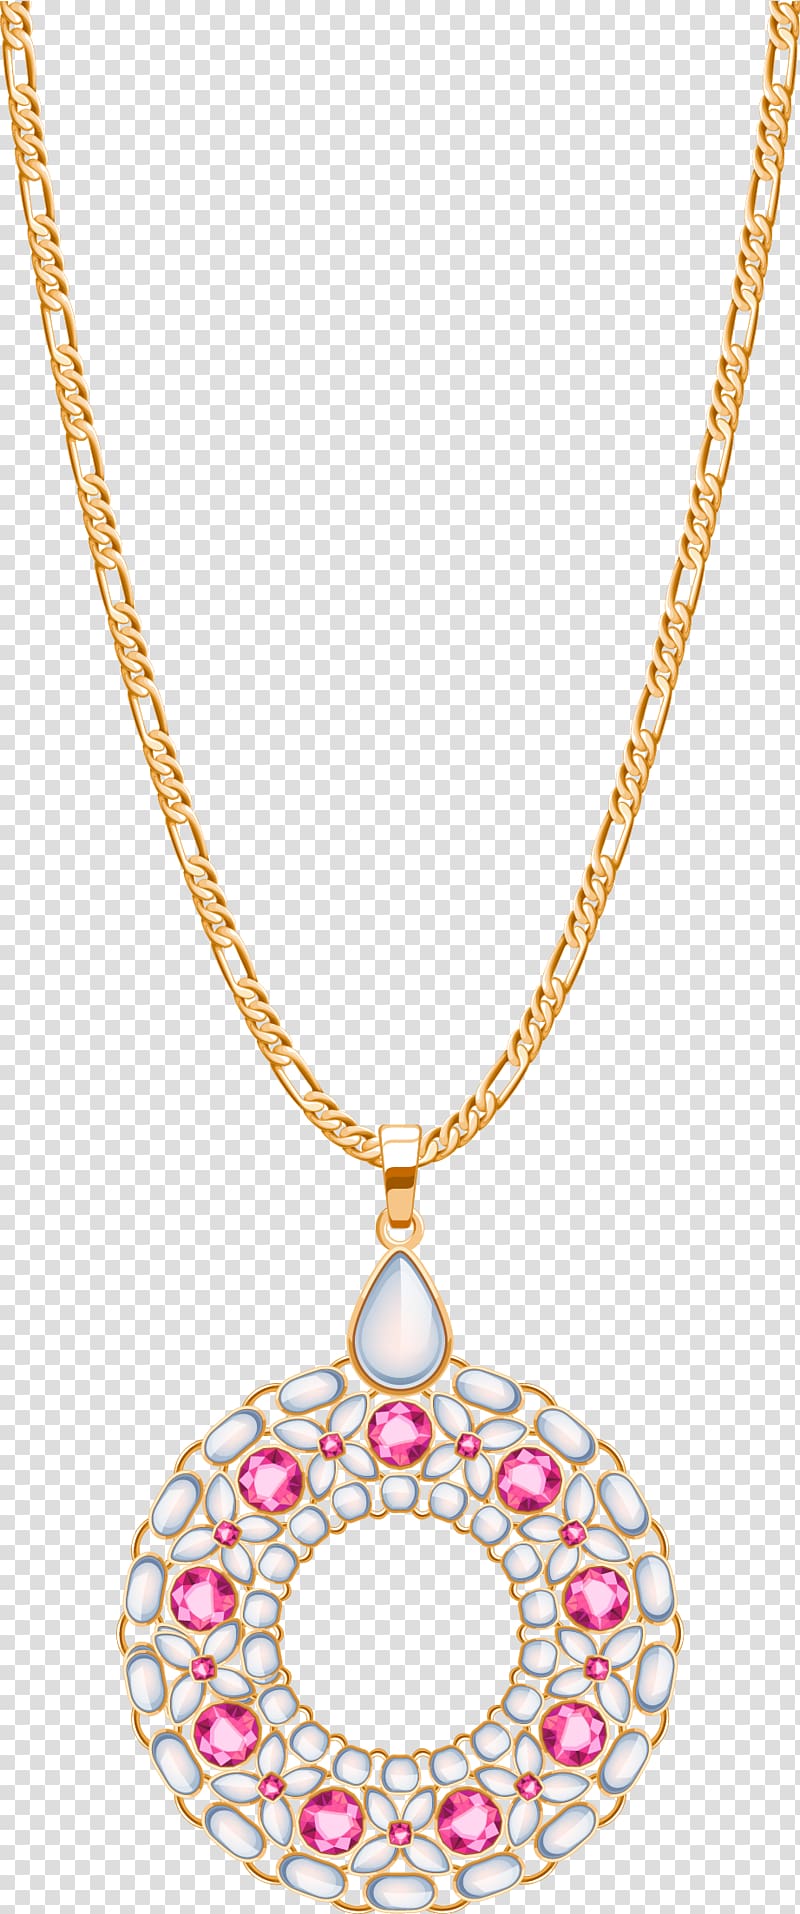 Locket Necklace Diamond Jewellery, Dazzling jewelry diamond jewelry transparent background PNG clipart